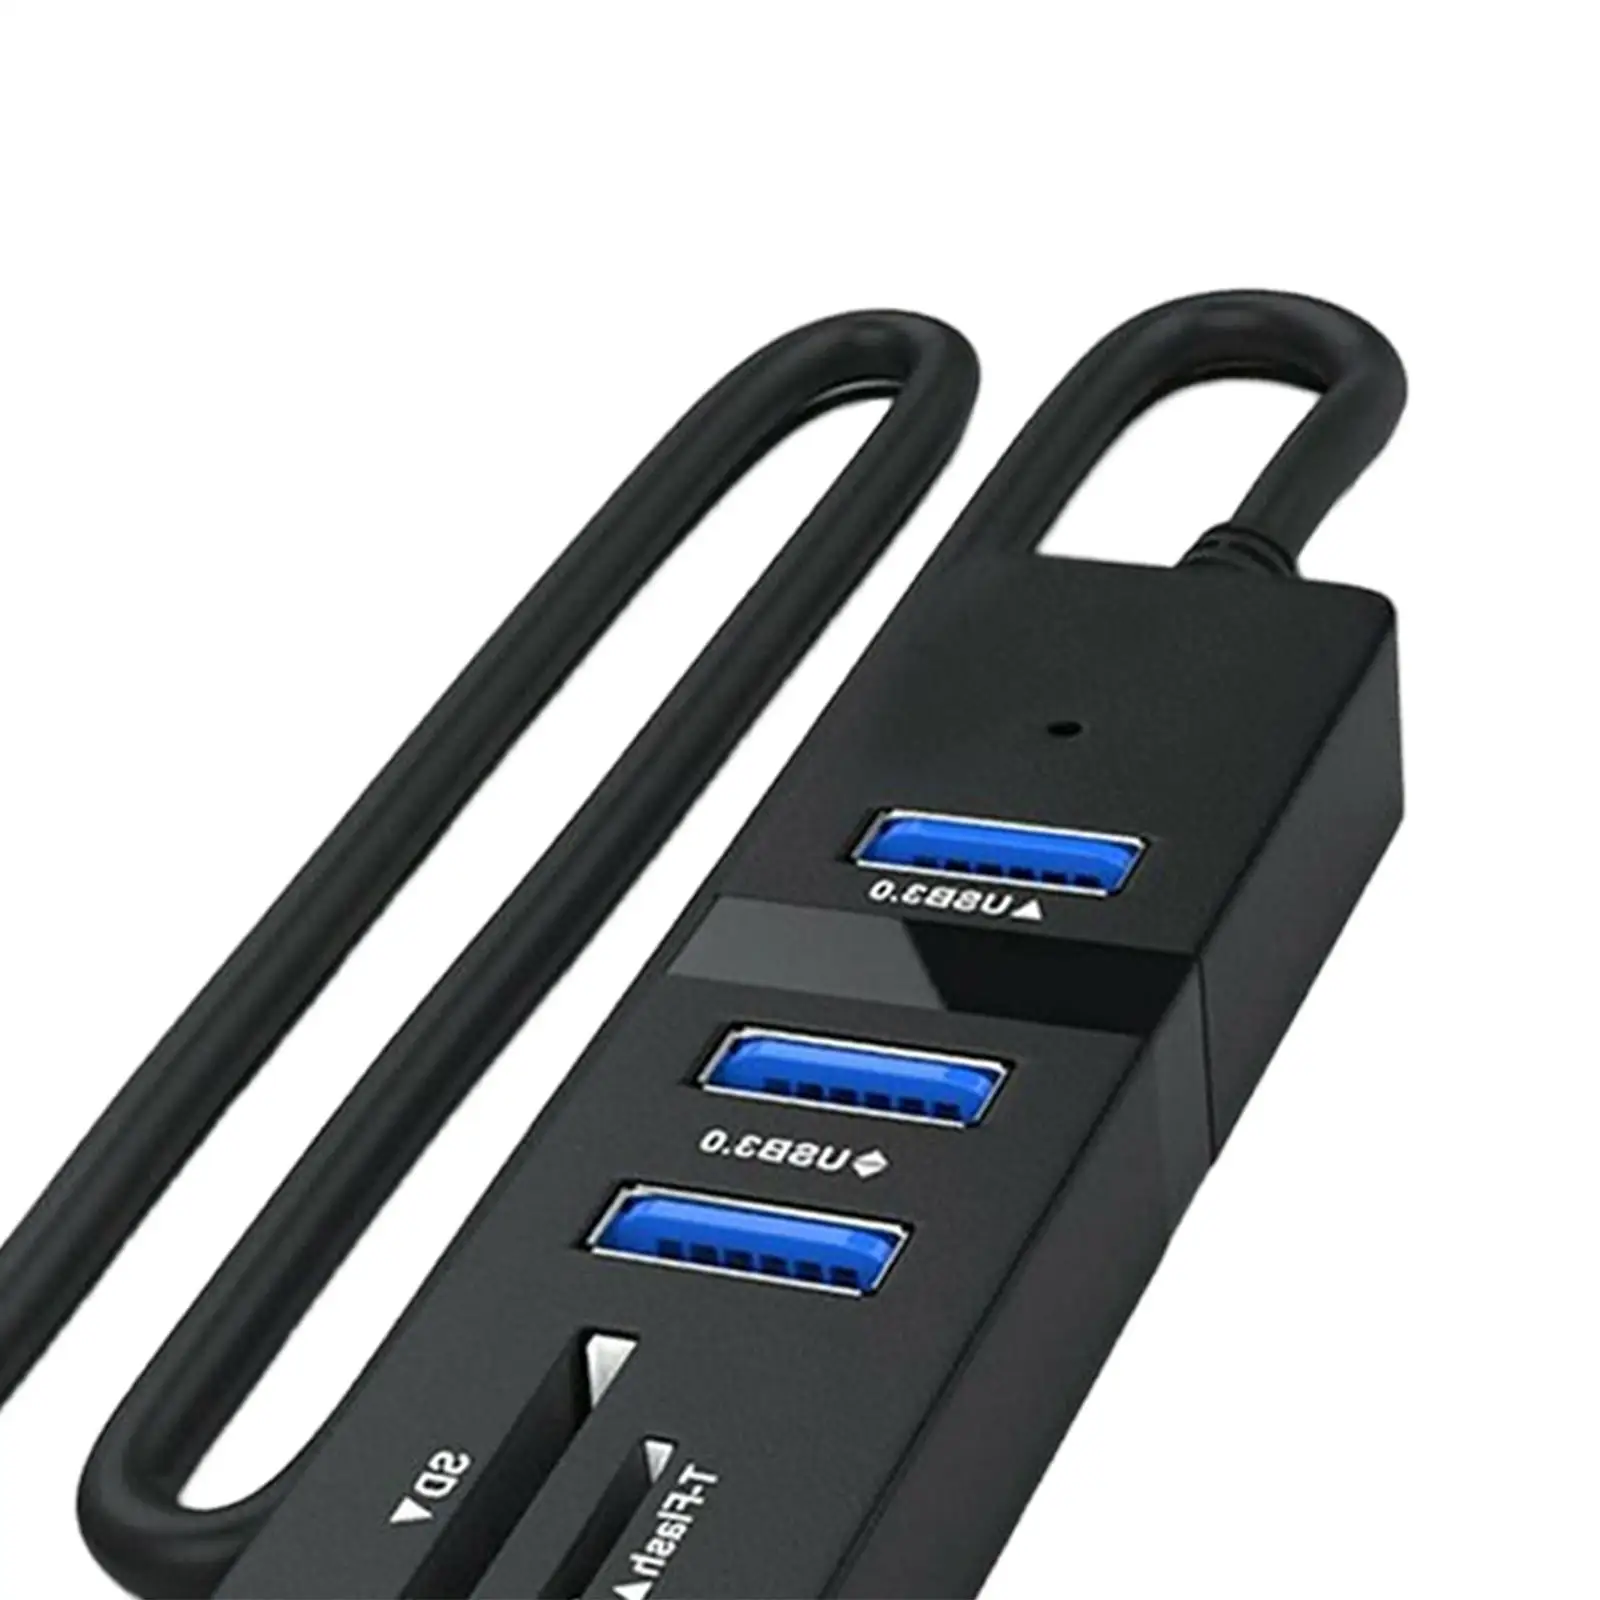 Portable three ports USB 3.0 Hub Compact Expansion Multi Splitter Plug and easy to Set data USB Hub for Computer Desktop